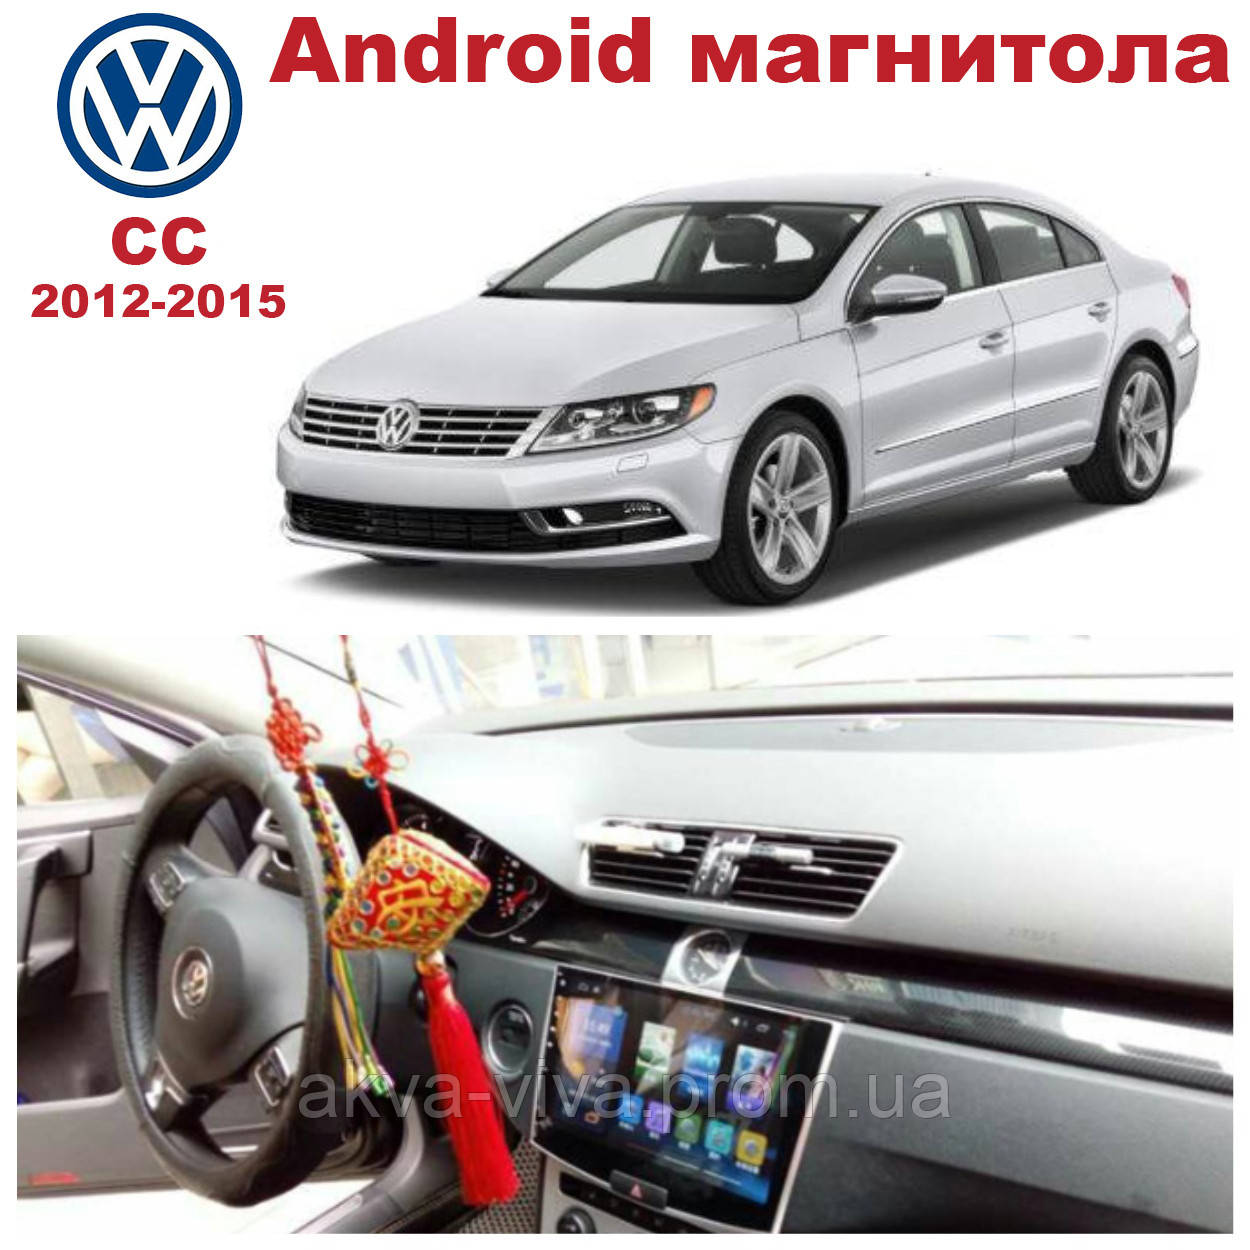 Штатна автомагнітола для Volkswagen Passat СС 2012-2015 на ANDROID 8.1